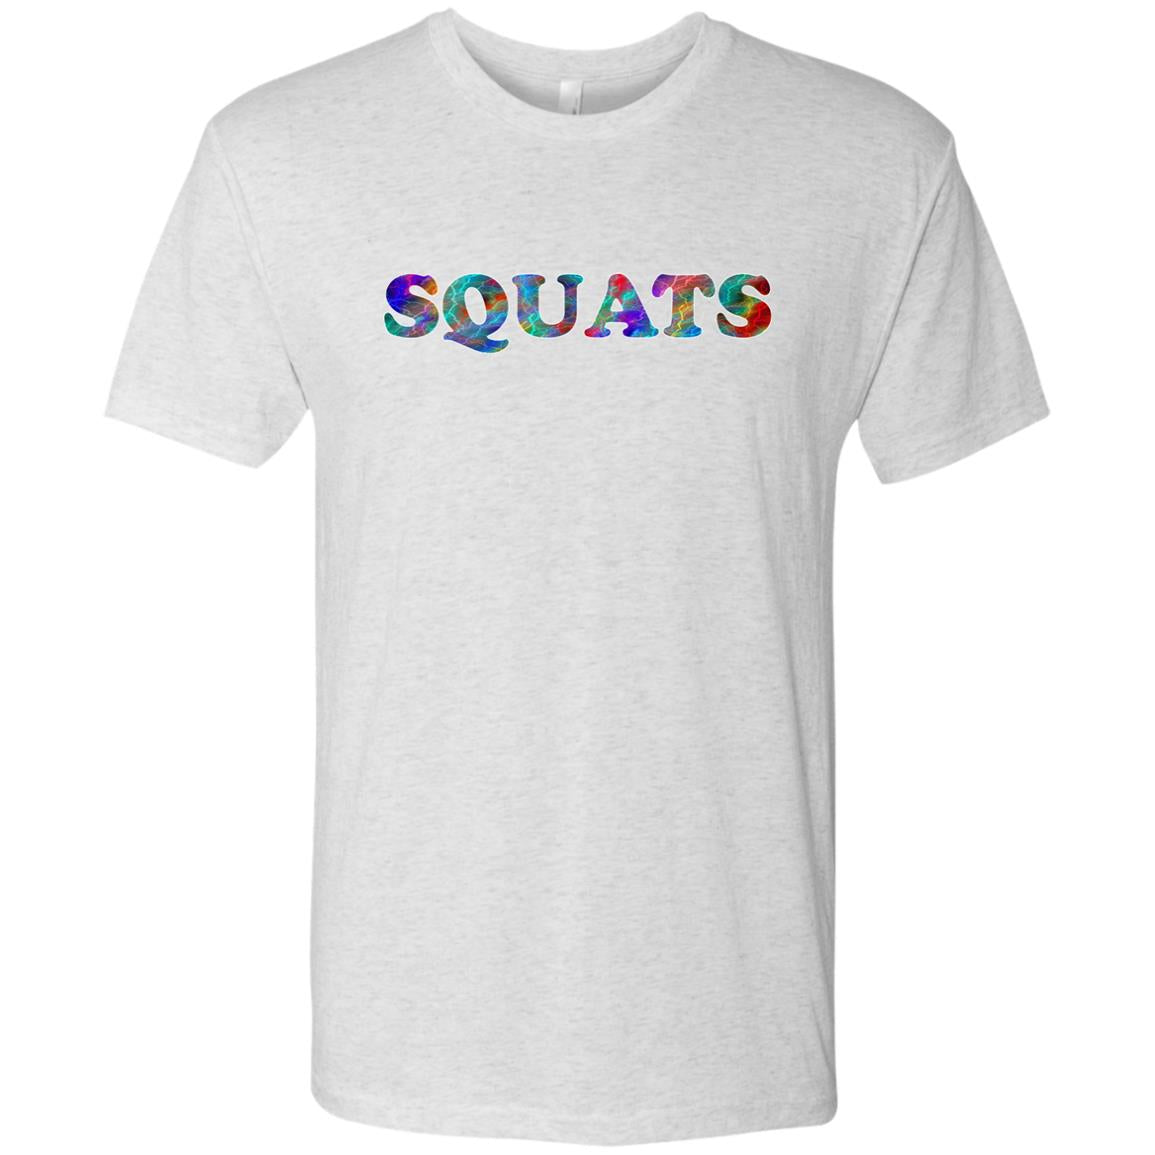 Squats Sport Mug